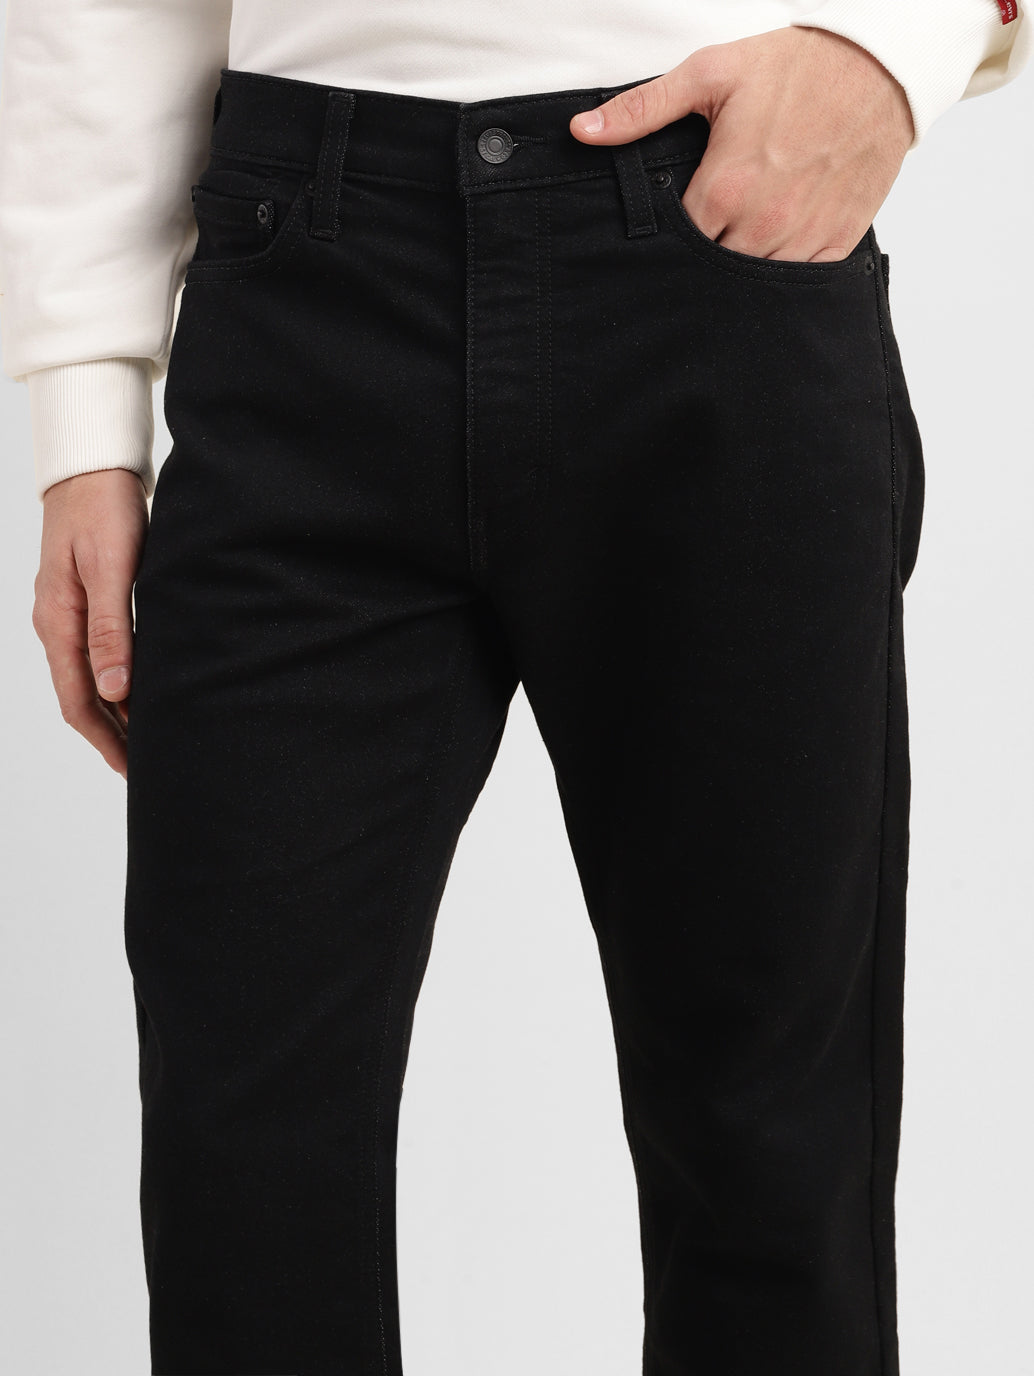 Men's 513 Black Slim Fit Jeans